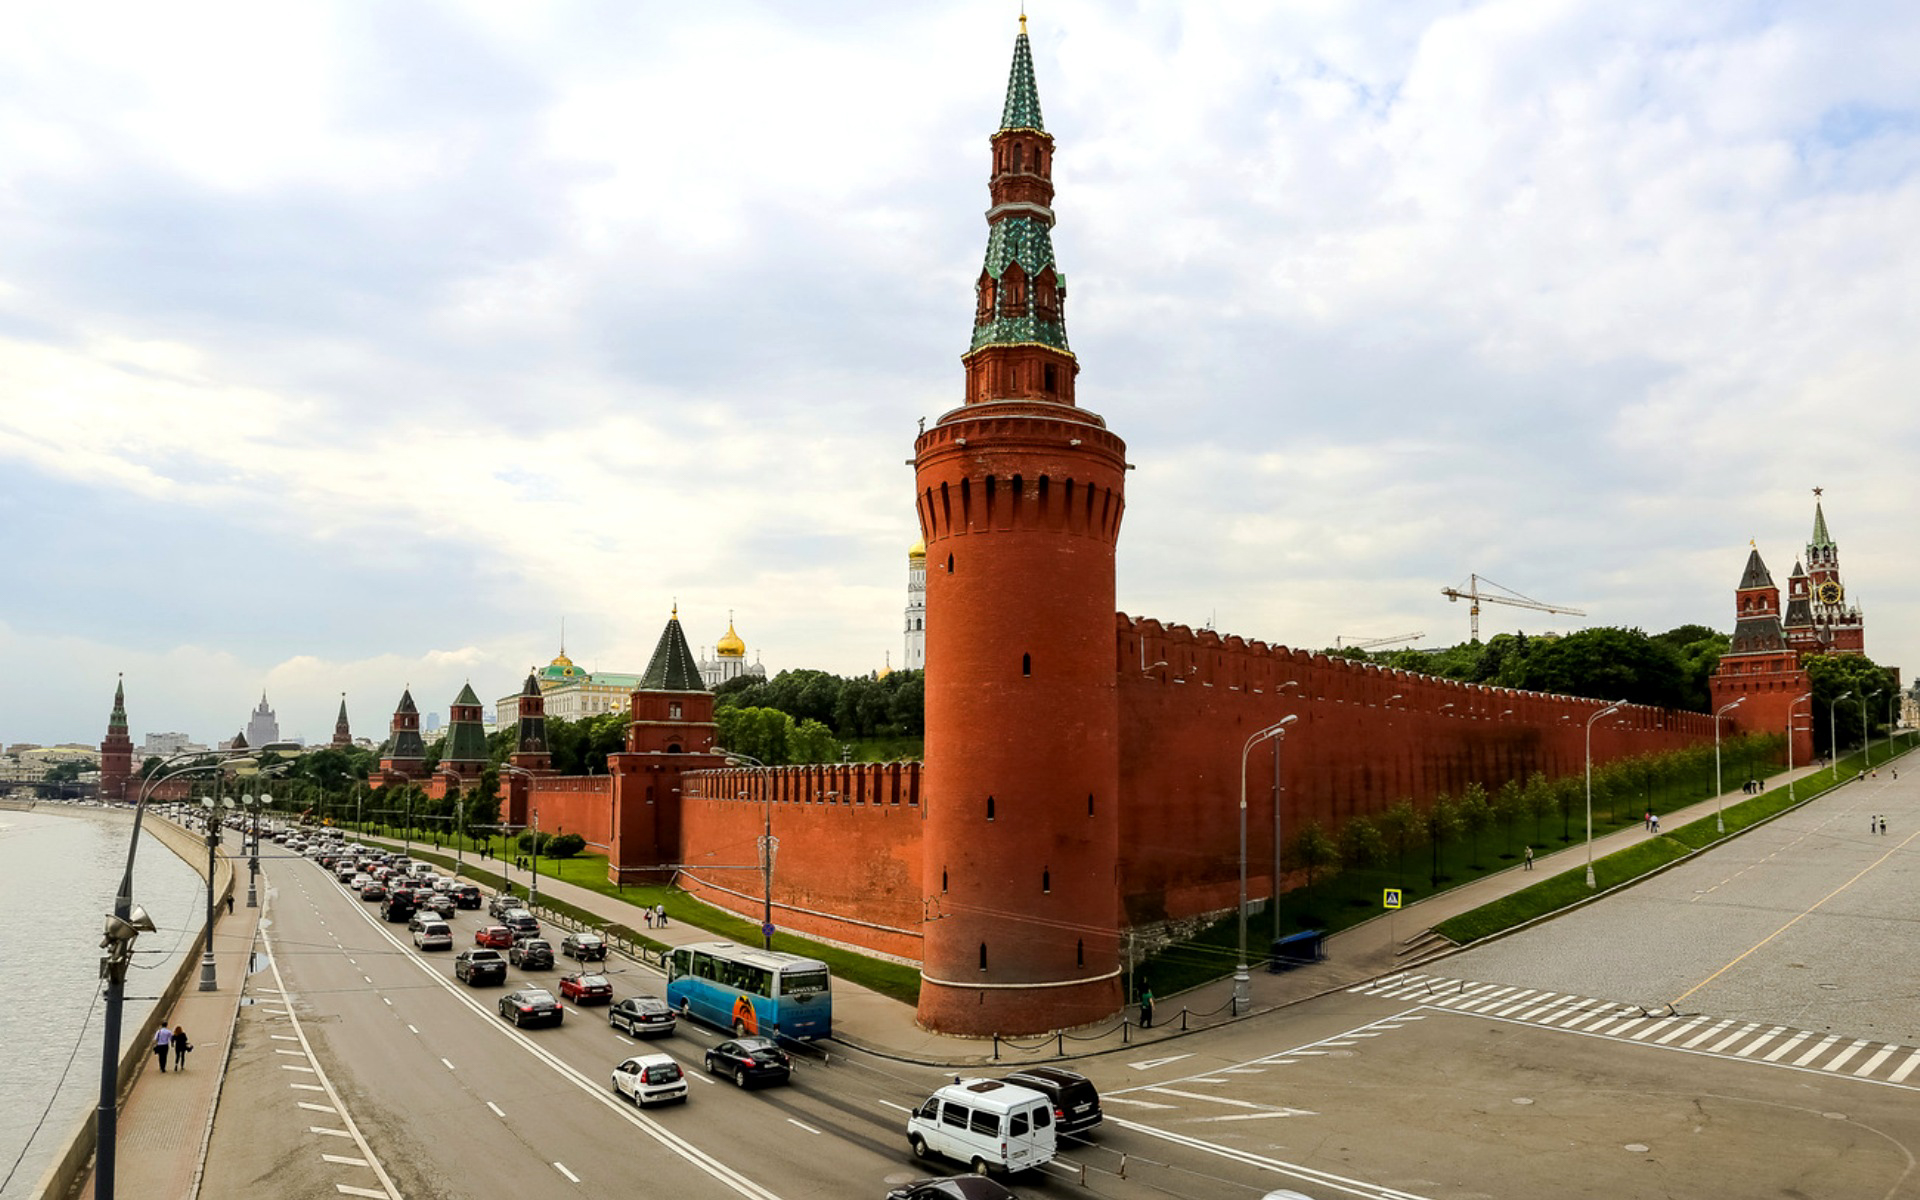 Угловая арсенальная башня кремля